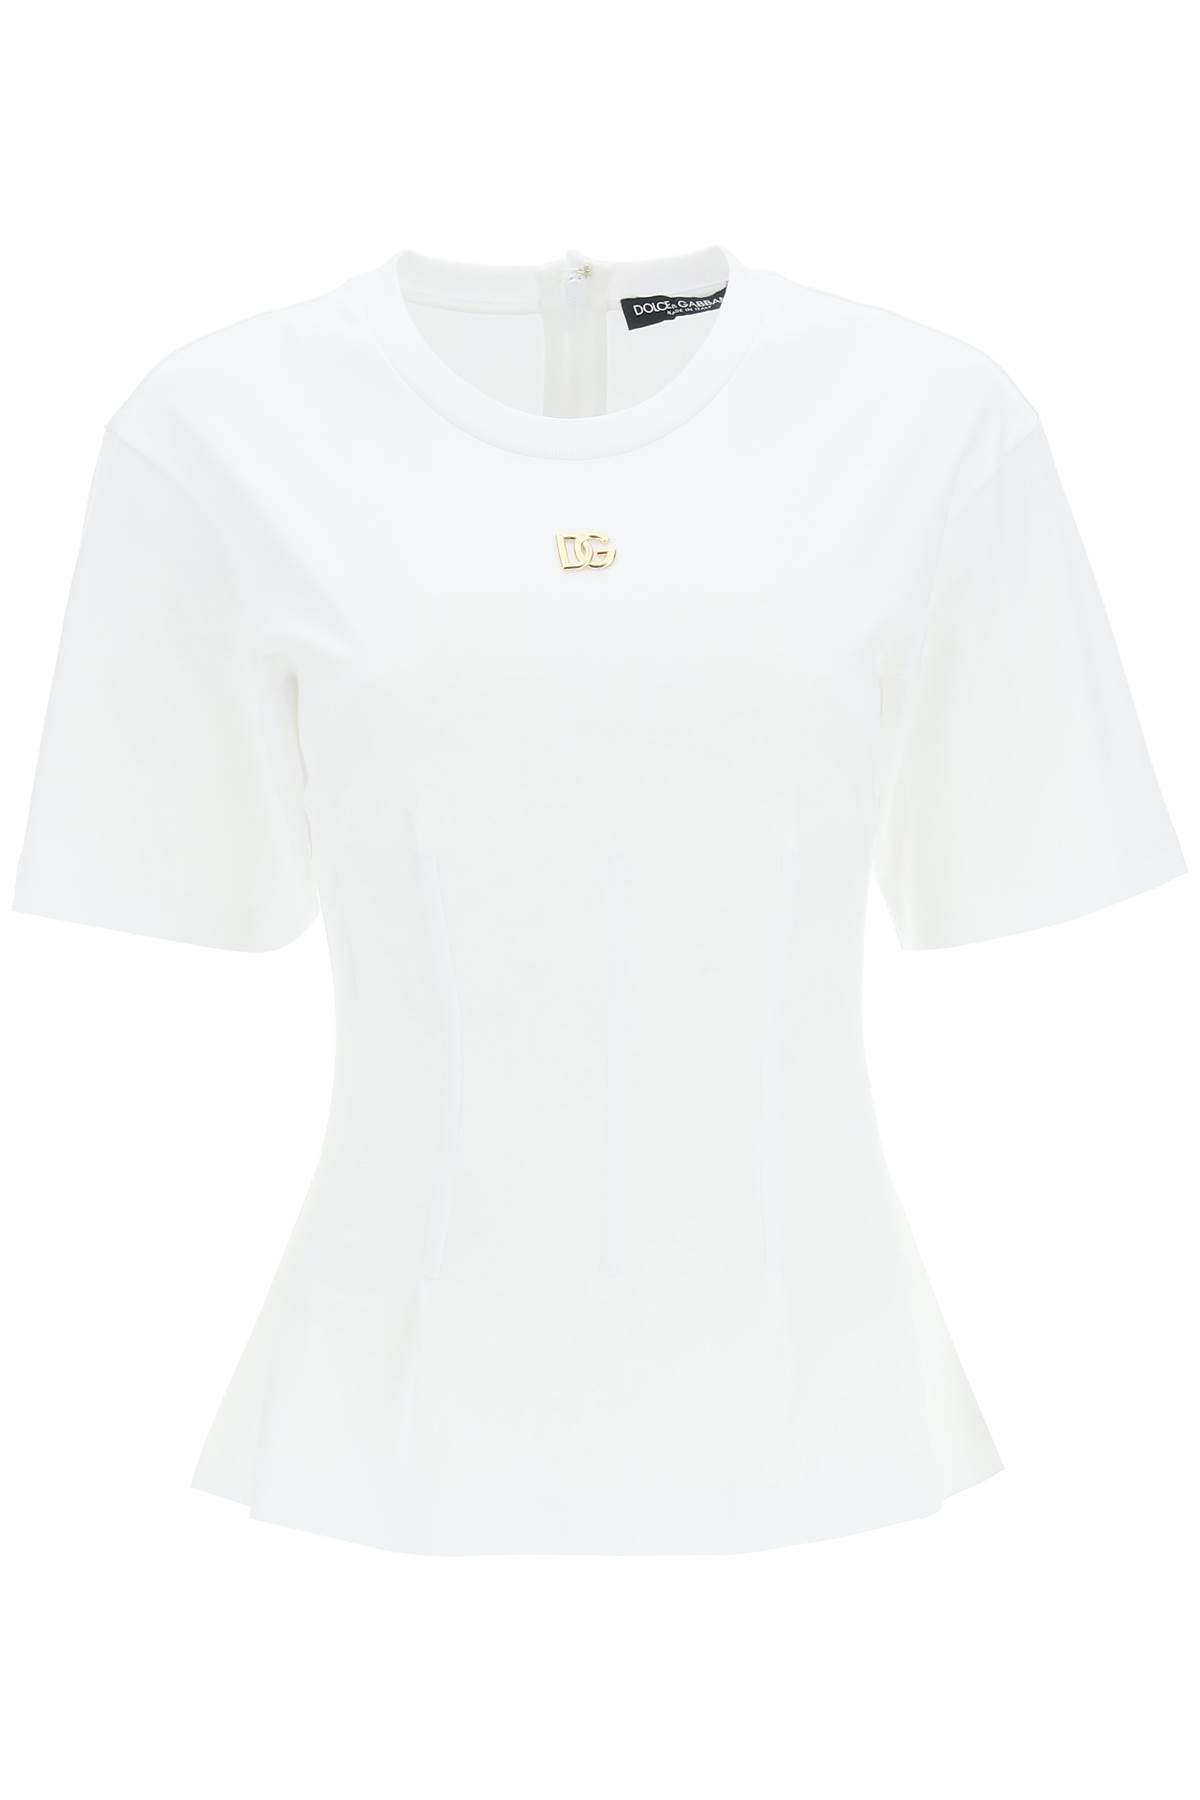 Dolce & Gabbana Logo Bustier T-shirt